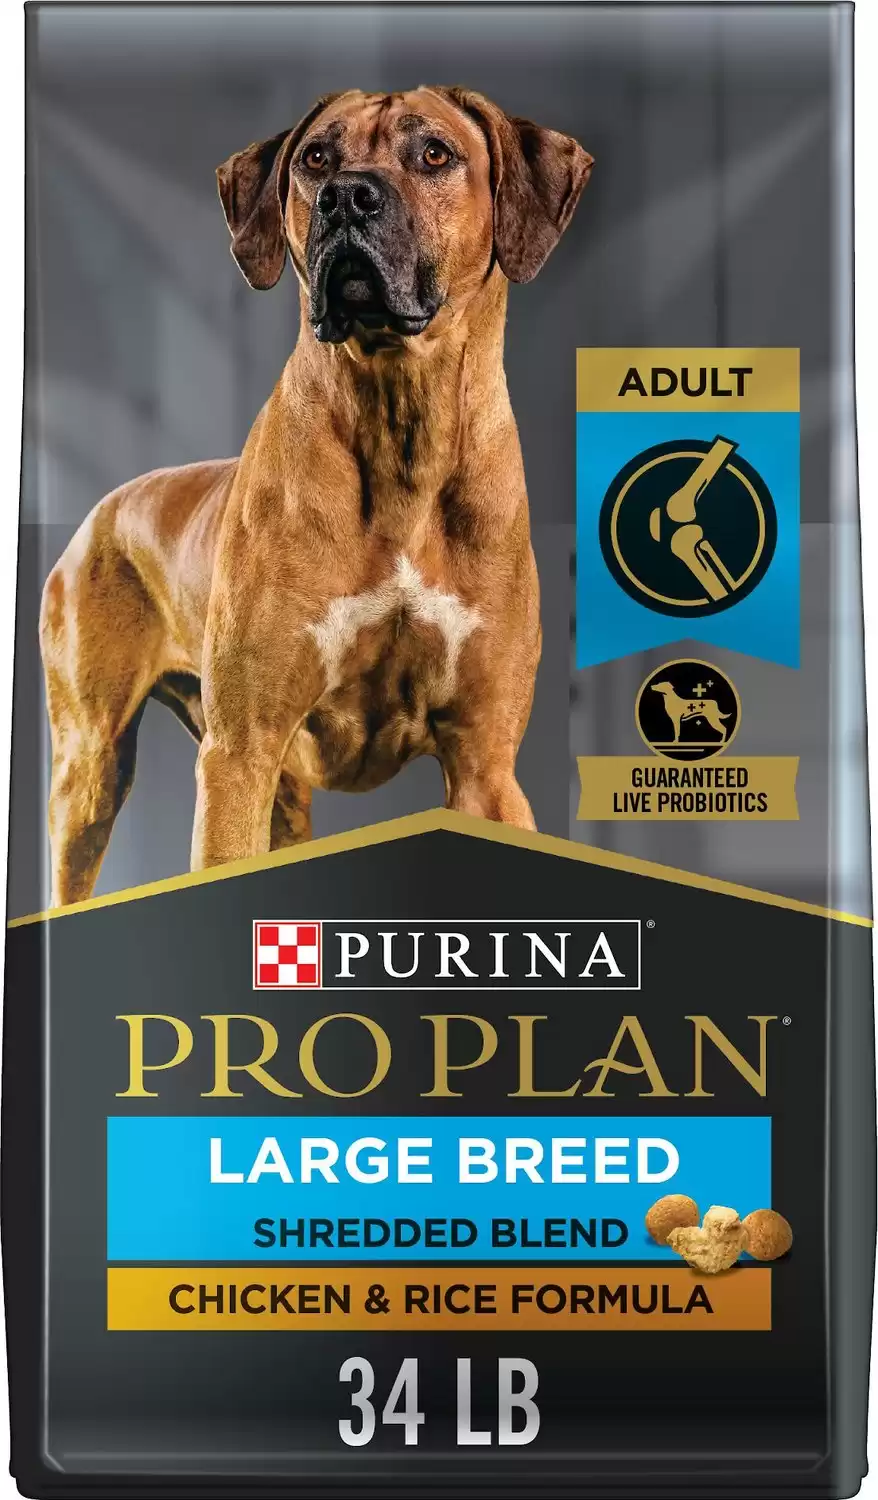 Purina Pro Plan Adult Large Breed Shredded Blend Chicken & Rice Formula